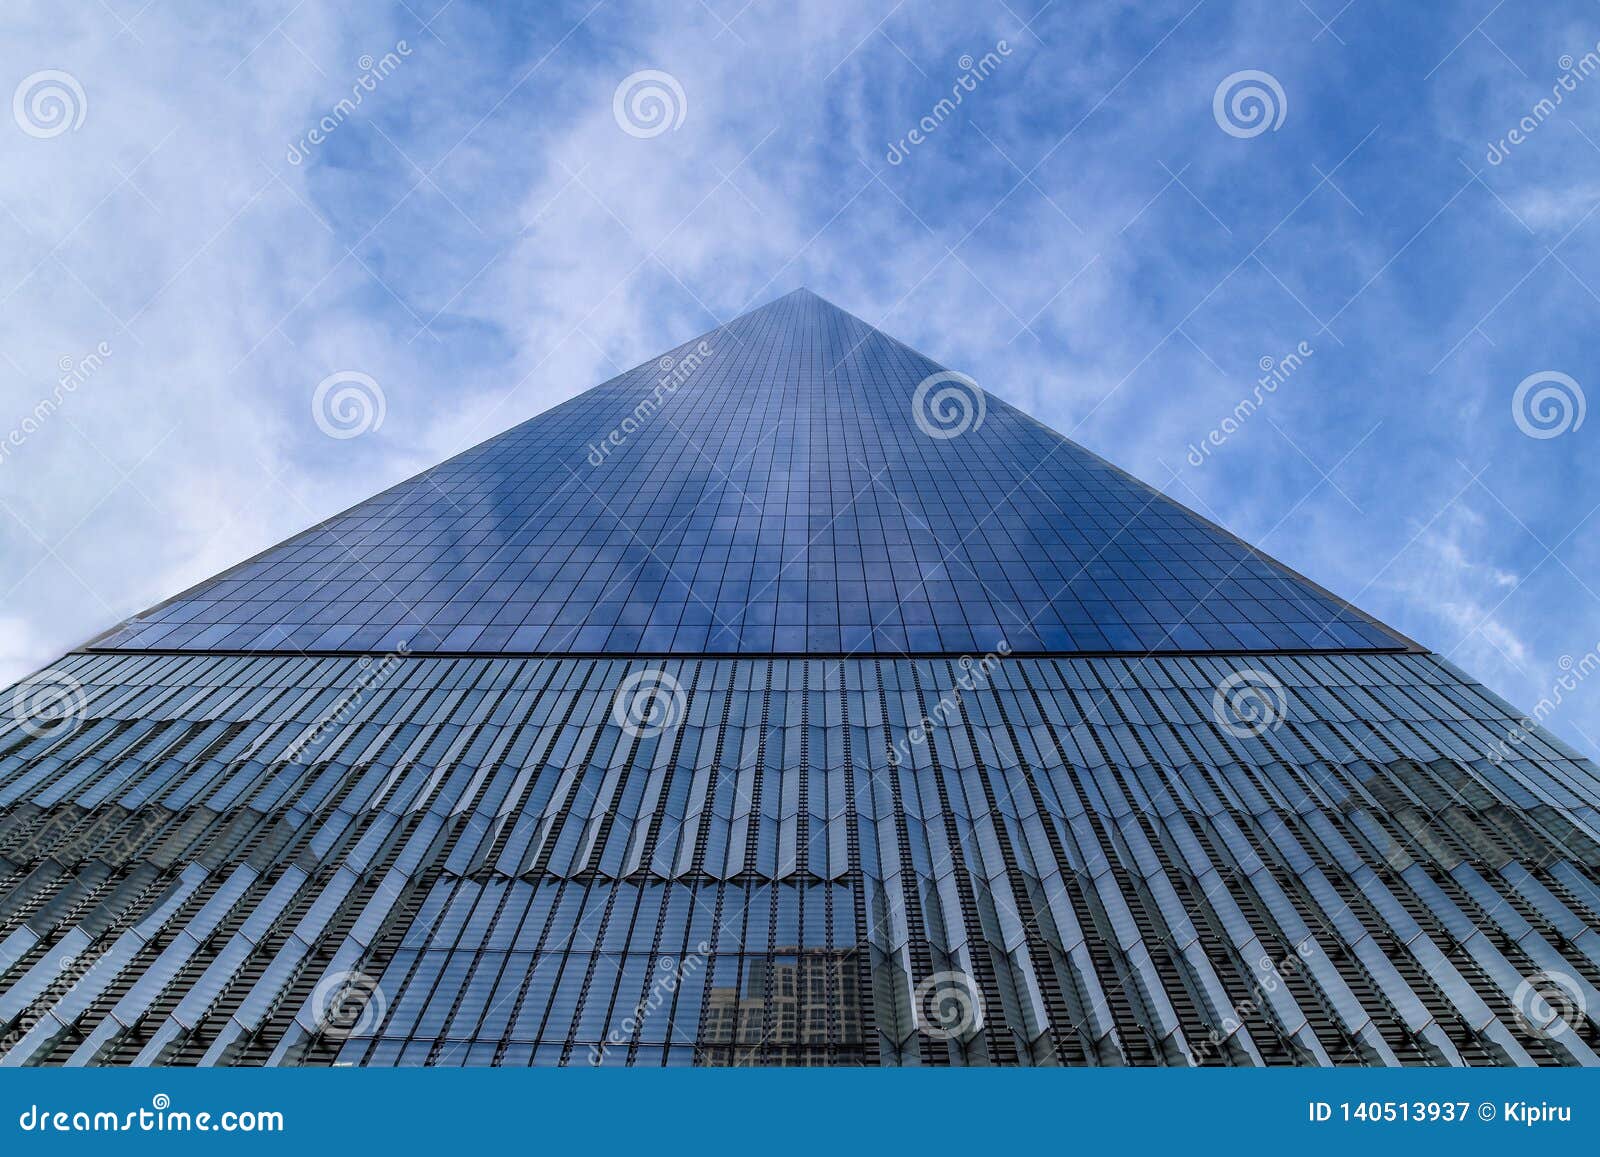 gigantic glass skyscraper from below, new york